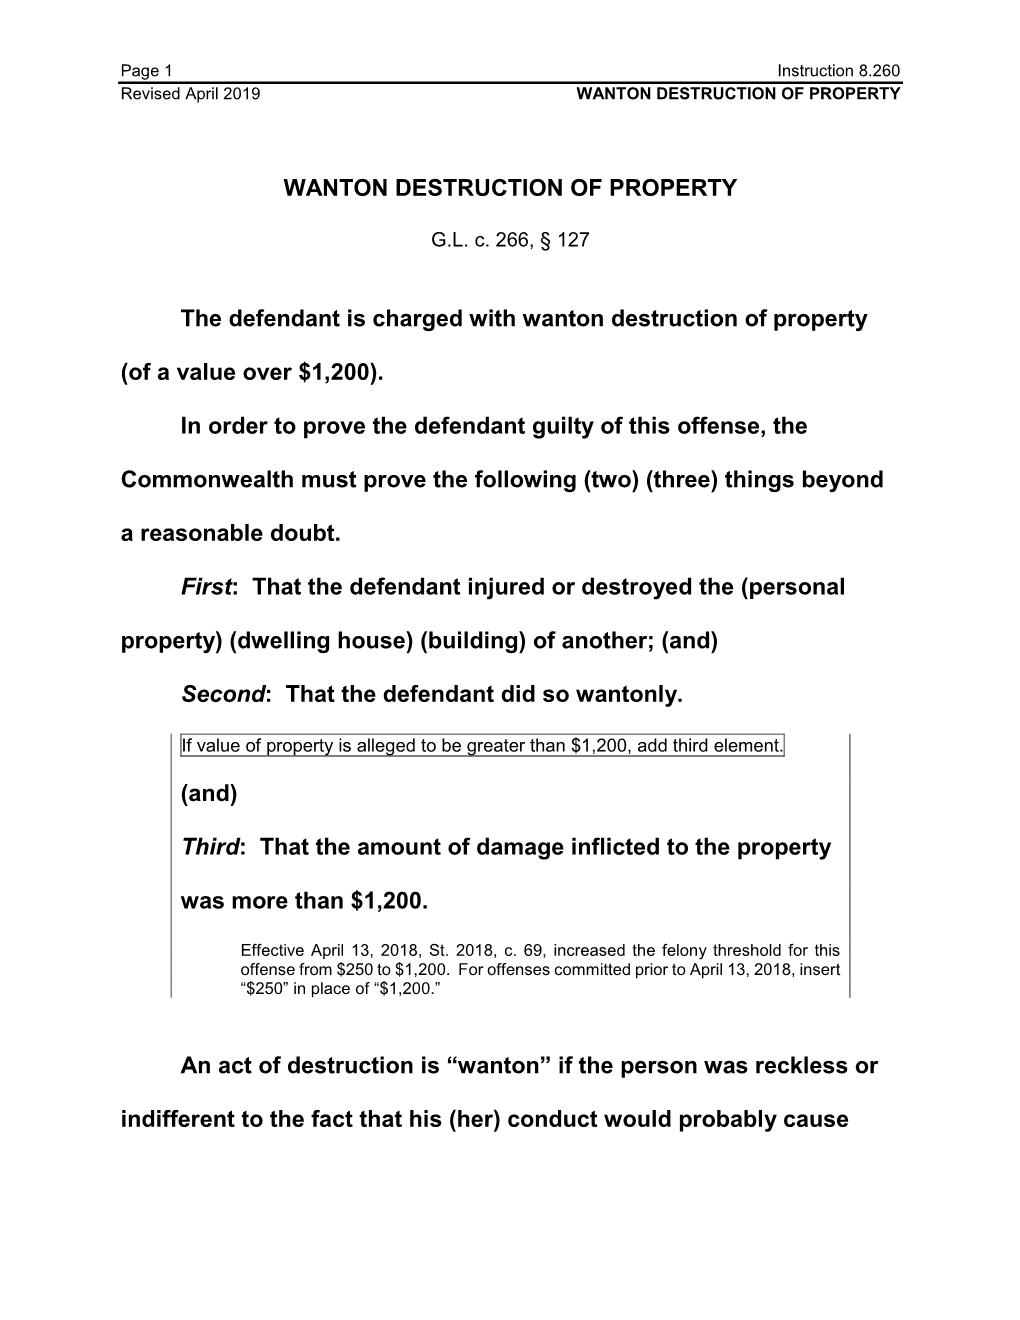 8.260 Wanton Destruction of Property